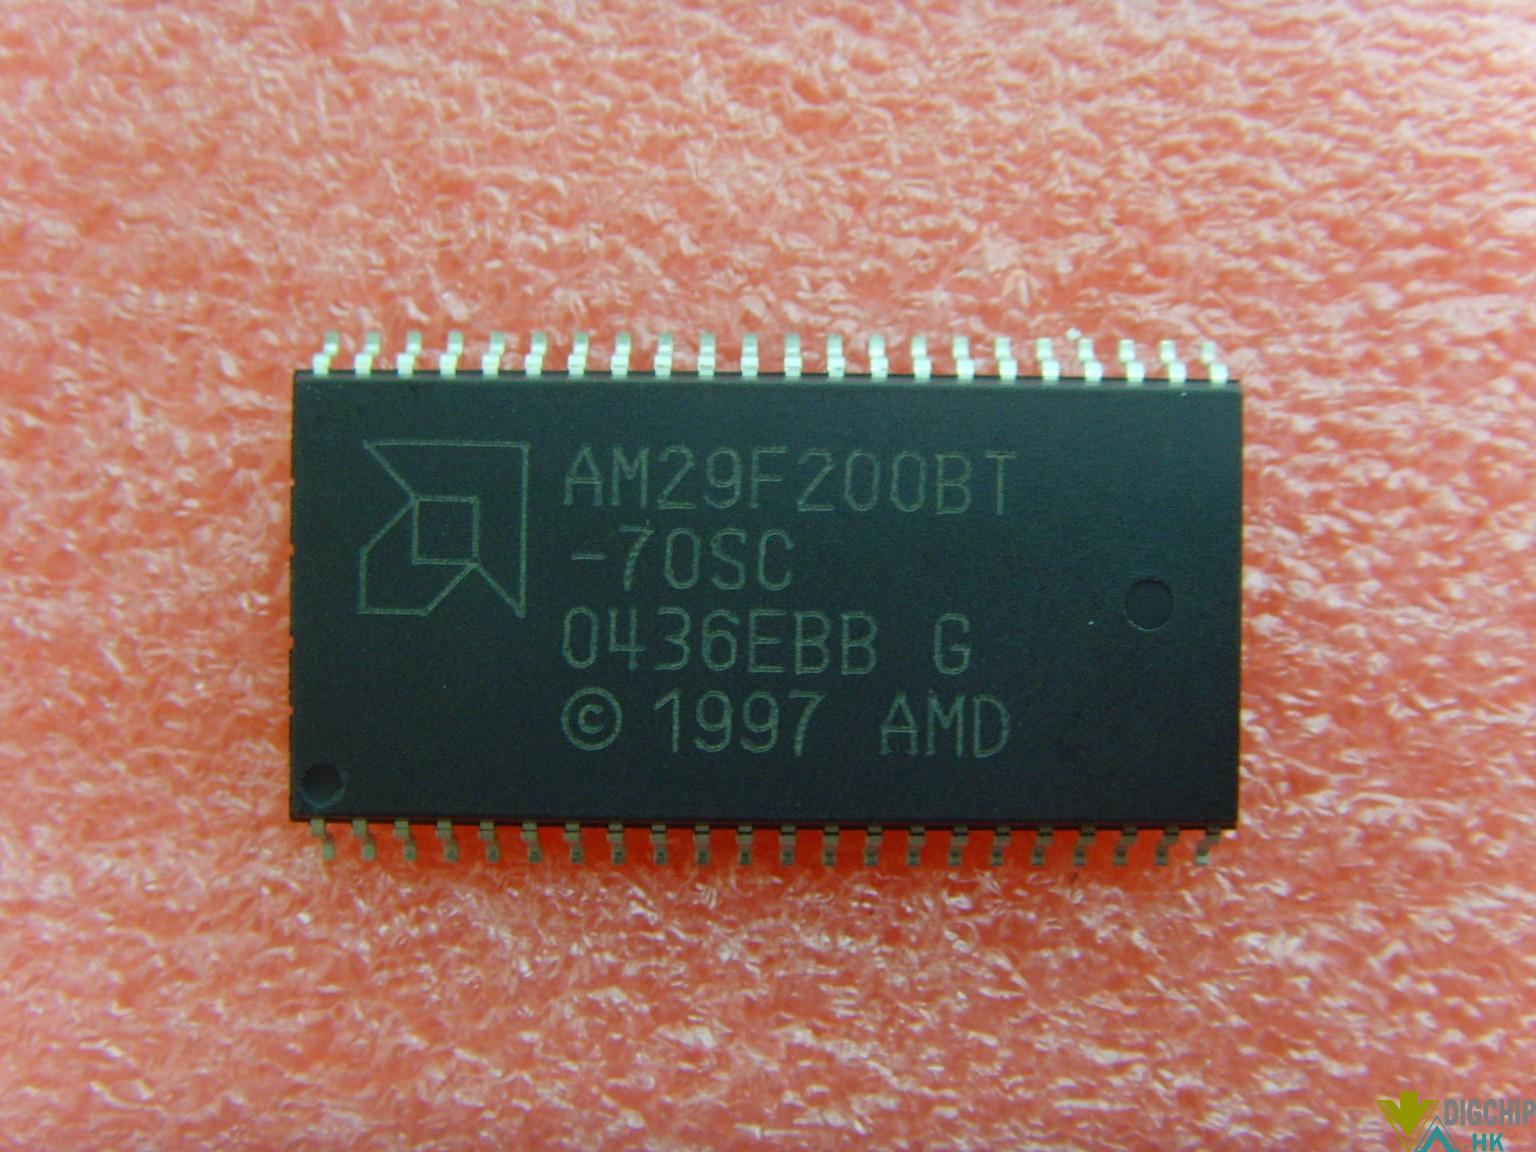 2 Megabit (256 K x 8-Bit/128 K x 16-Bit) CMOS 5.0 Volt-only, Boot Sector Flash Memory